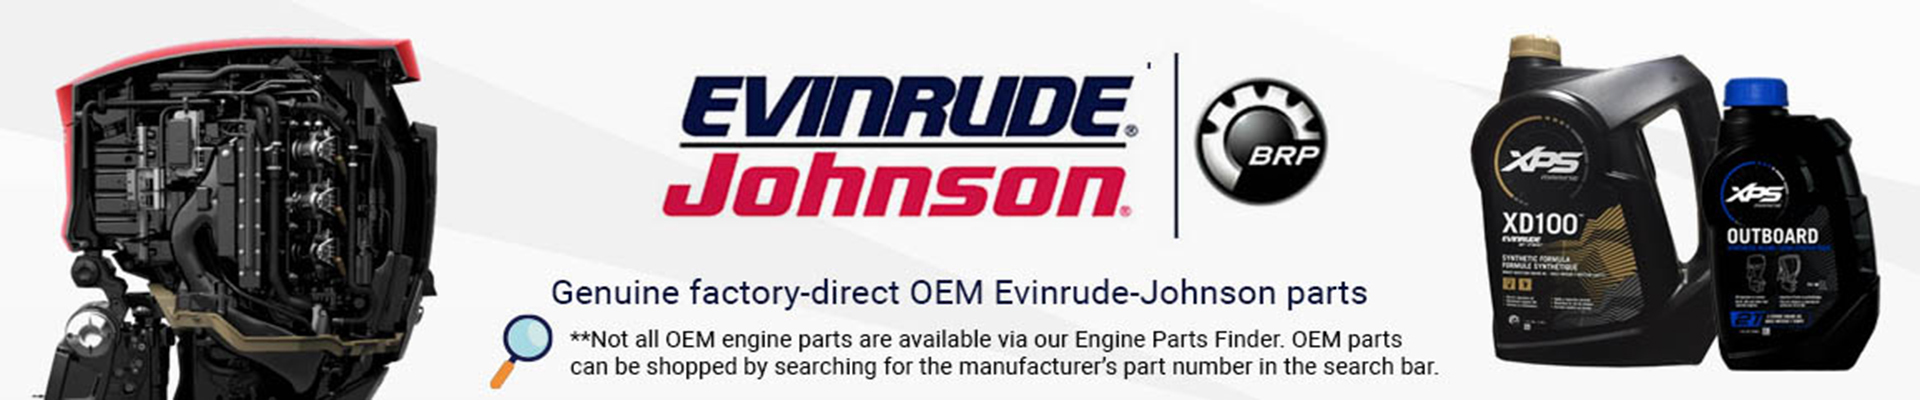 johnson-evinrude-omc-brand-page-banner.jpg